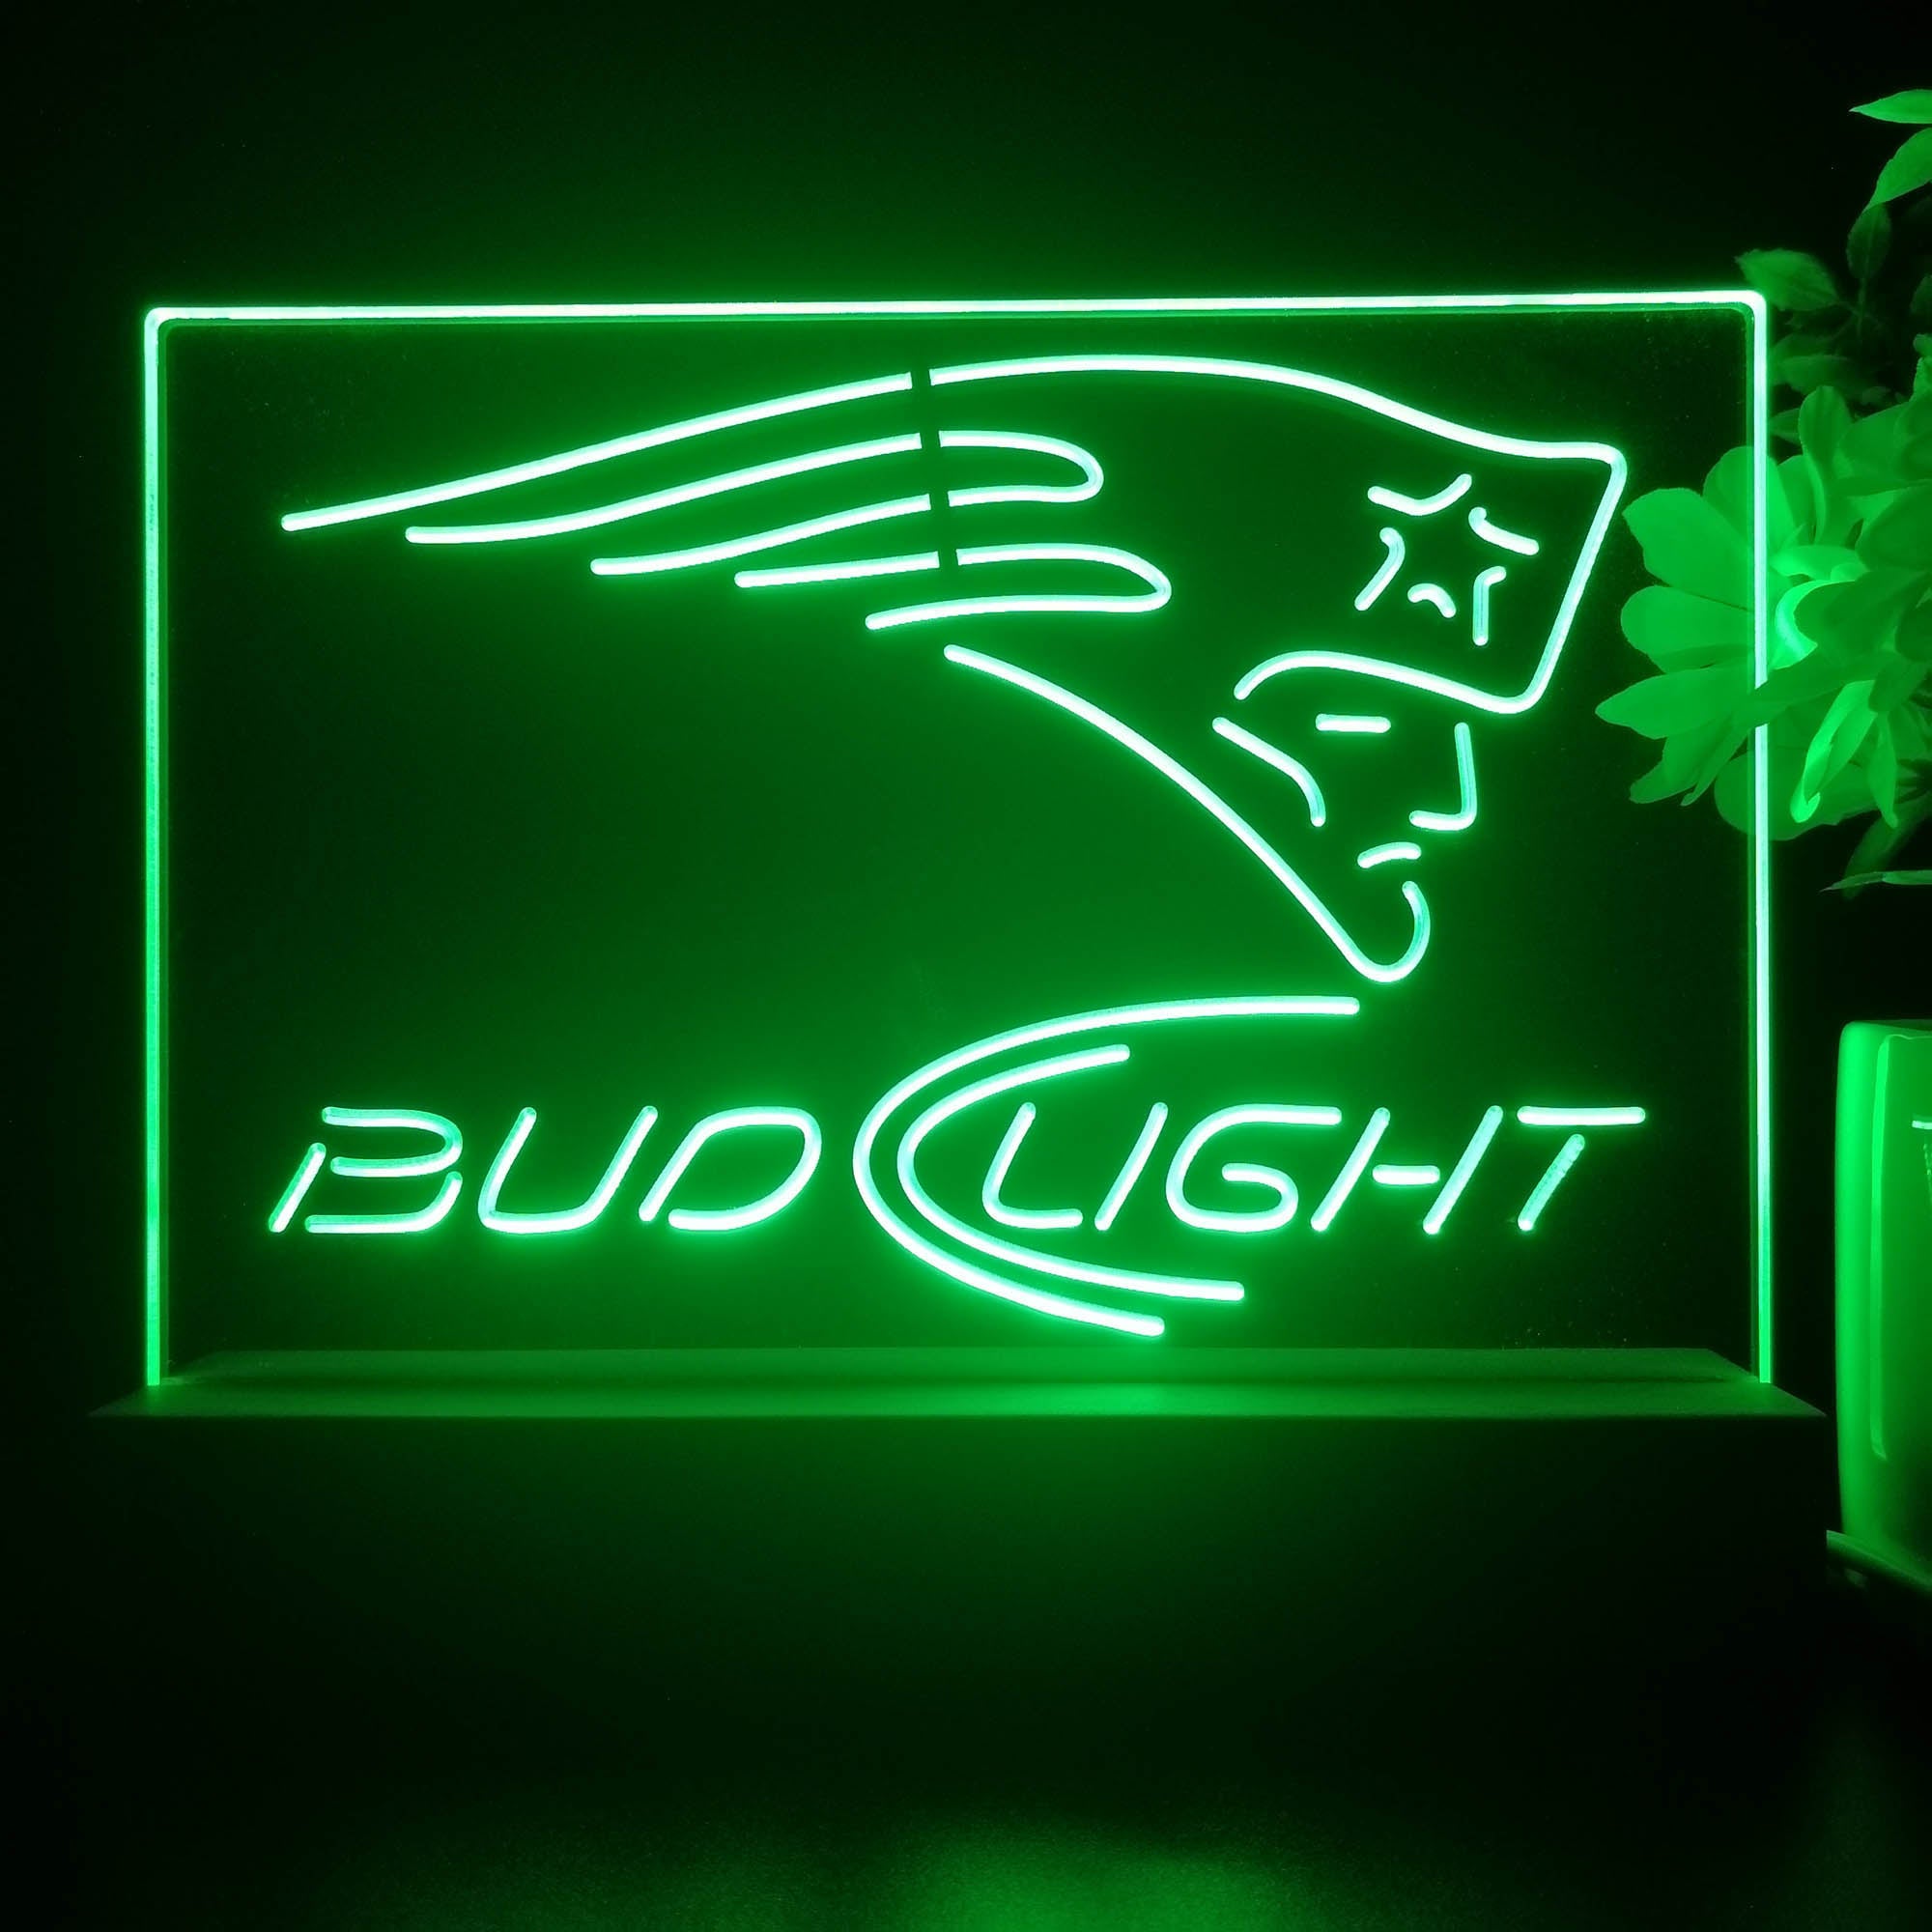 Bud Light New England Patriots Night Light Pub Bar Lamp